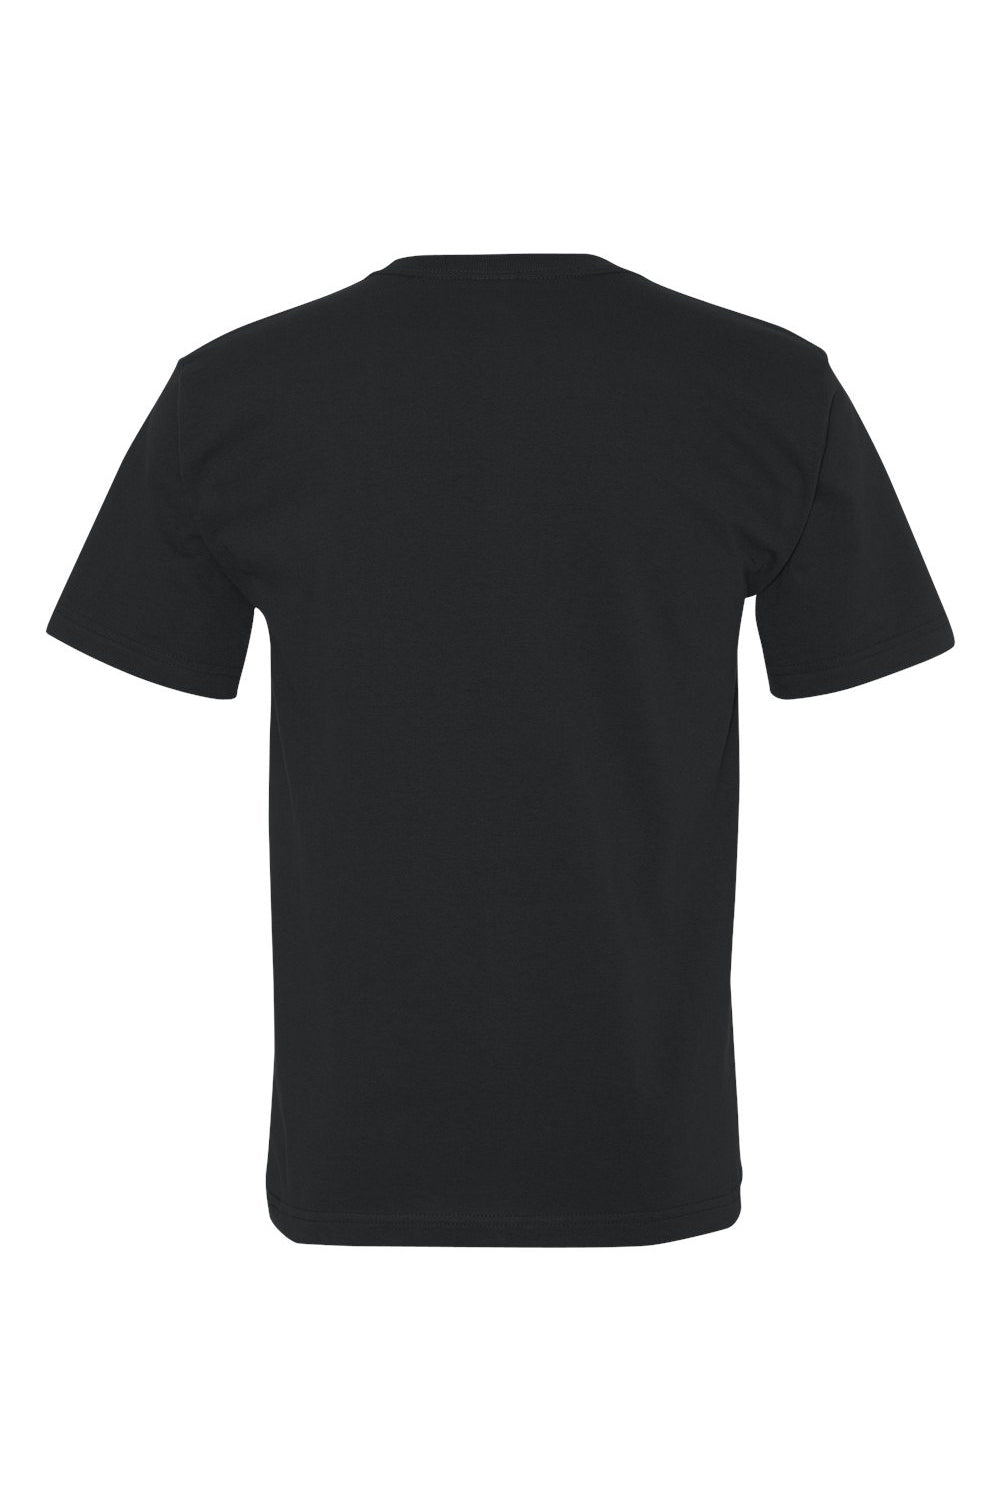 Bayside BA5070 Mens USA Made Short Sleeve Crewneck T-Shirt w/ Pocket Black Flat Back